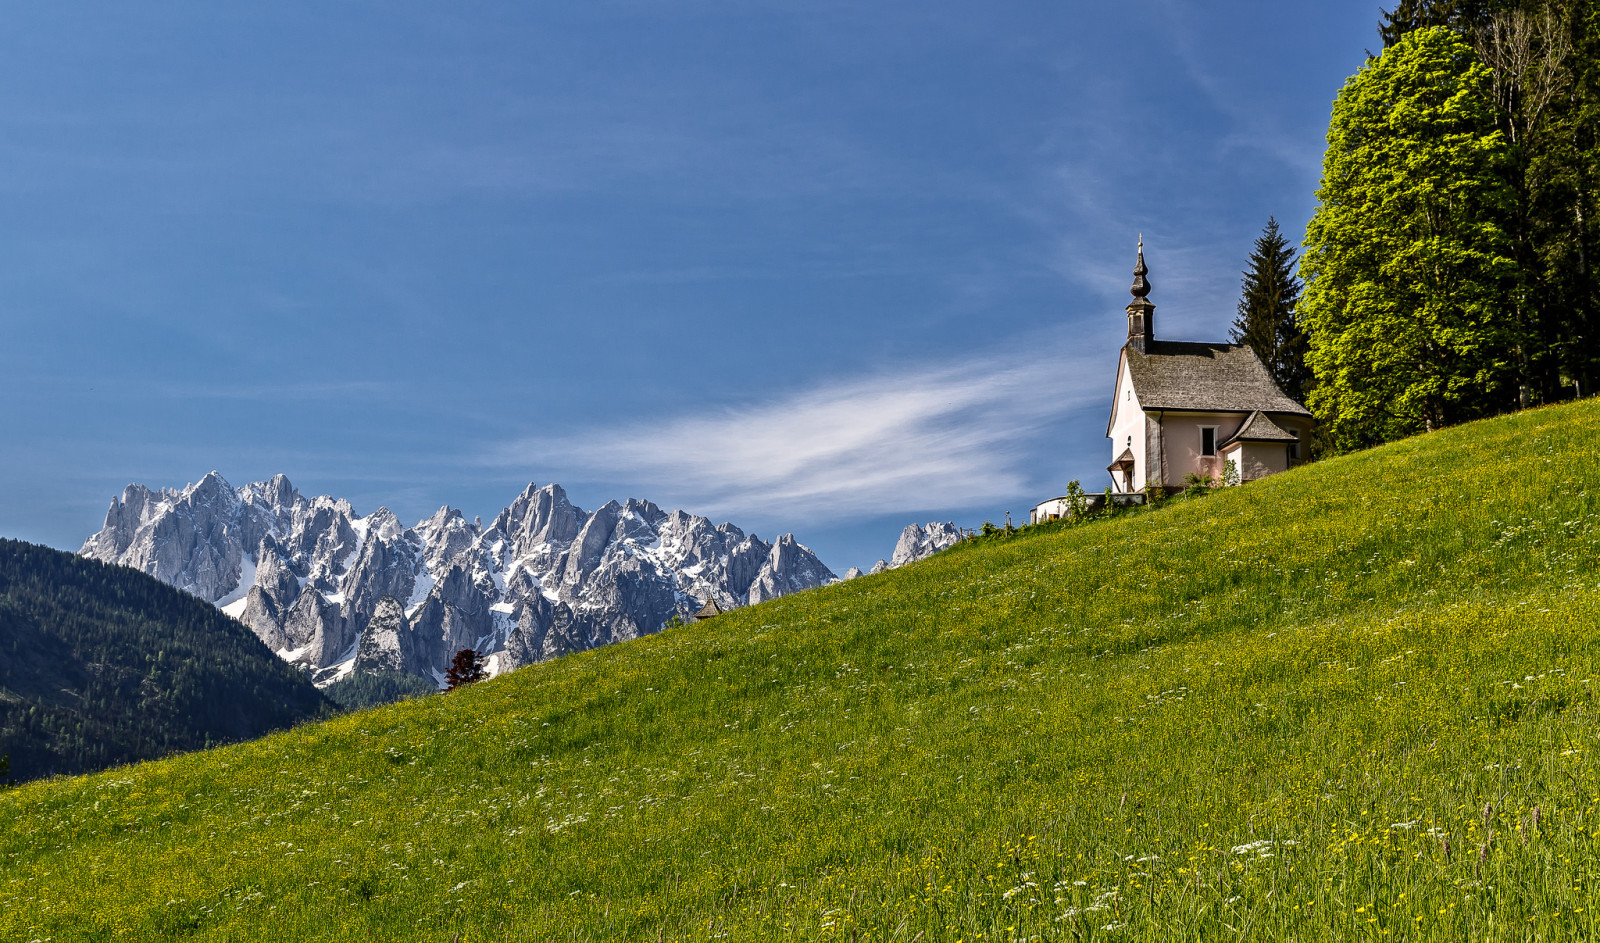 rumput, gunung, pegunungan Alpen, lereng, Gereja